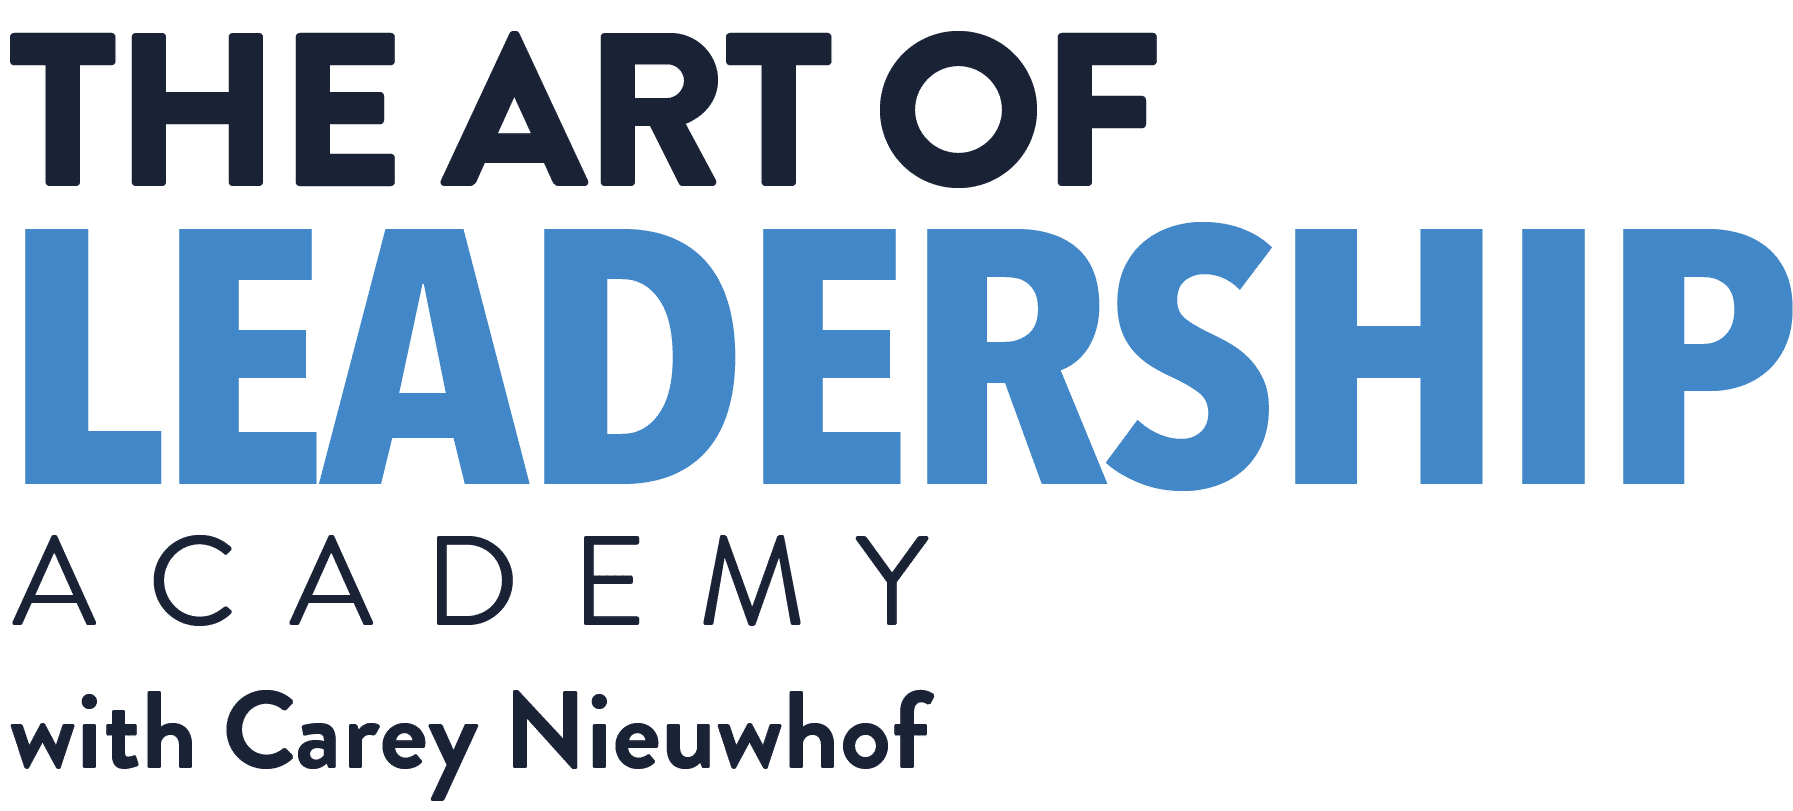 Art of Leadership Academy